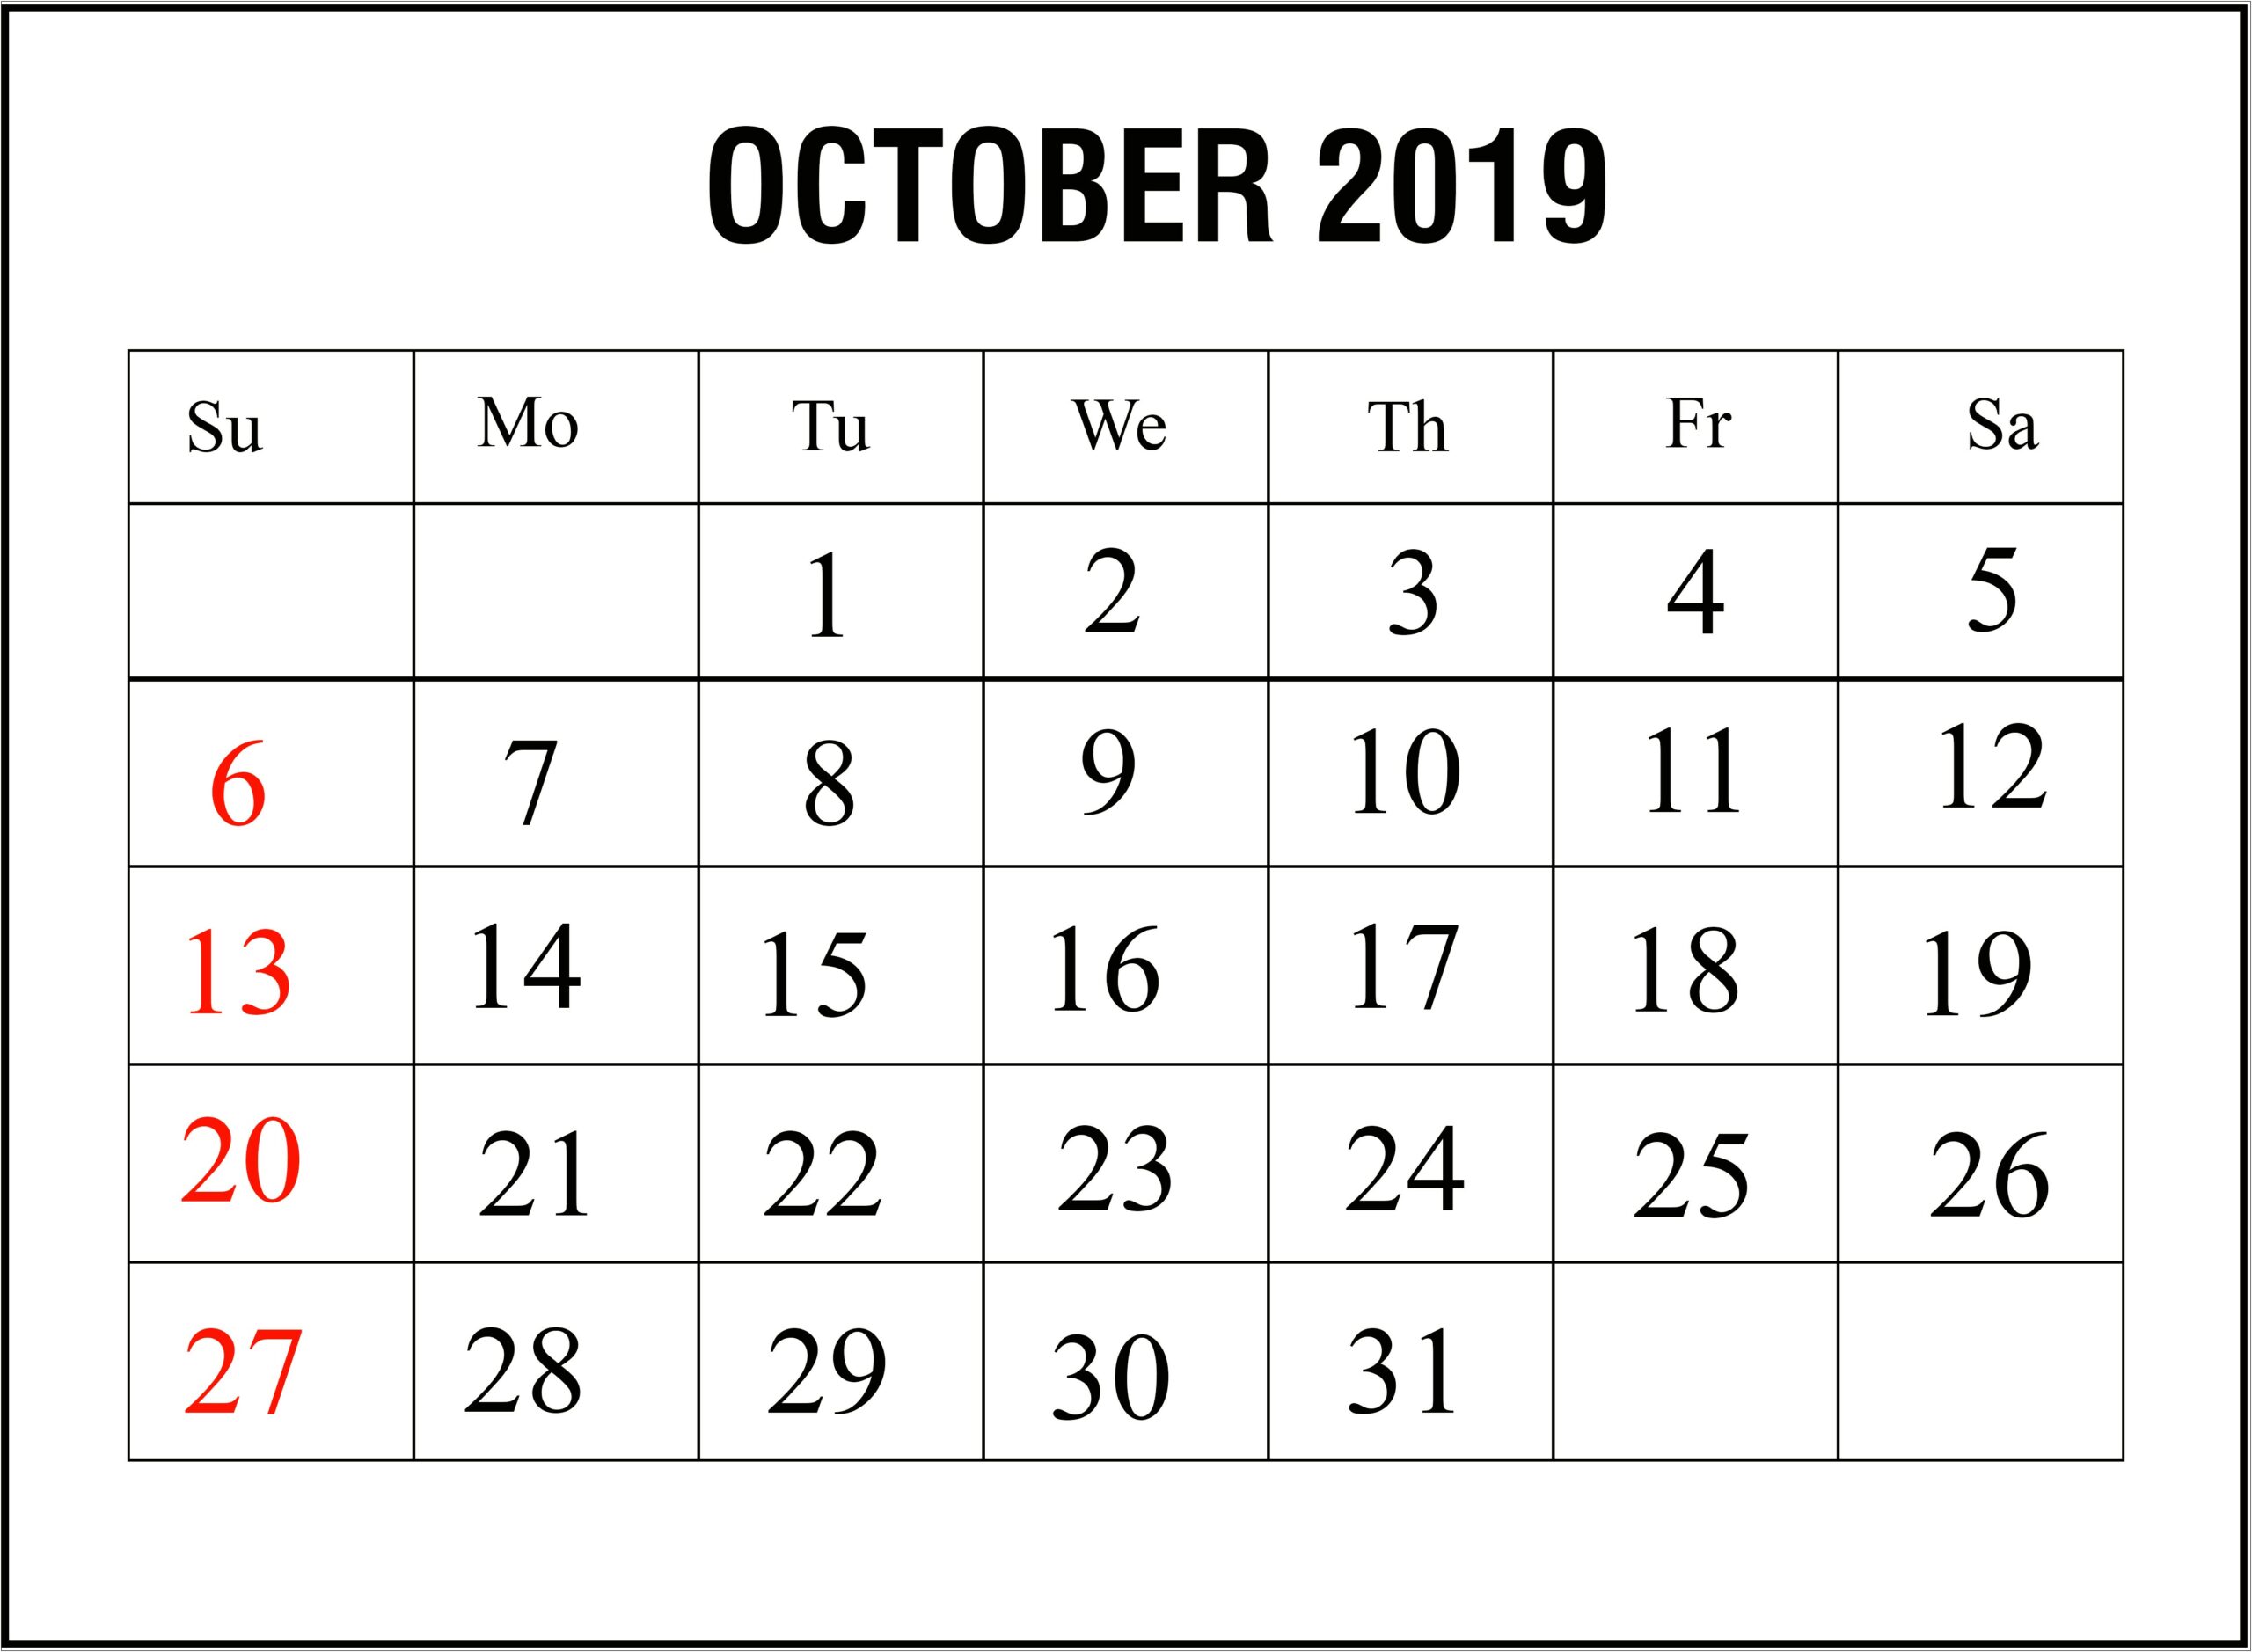 October 2019 Calendar Template Ms Word